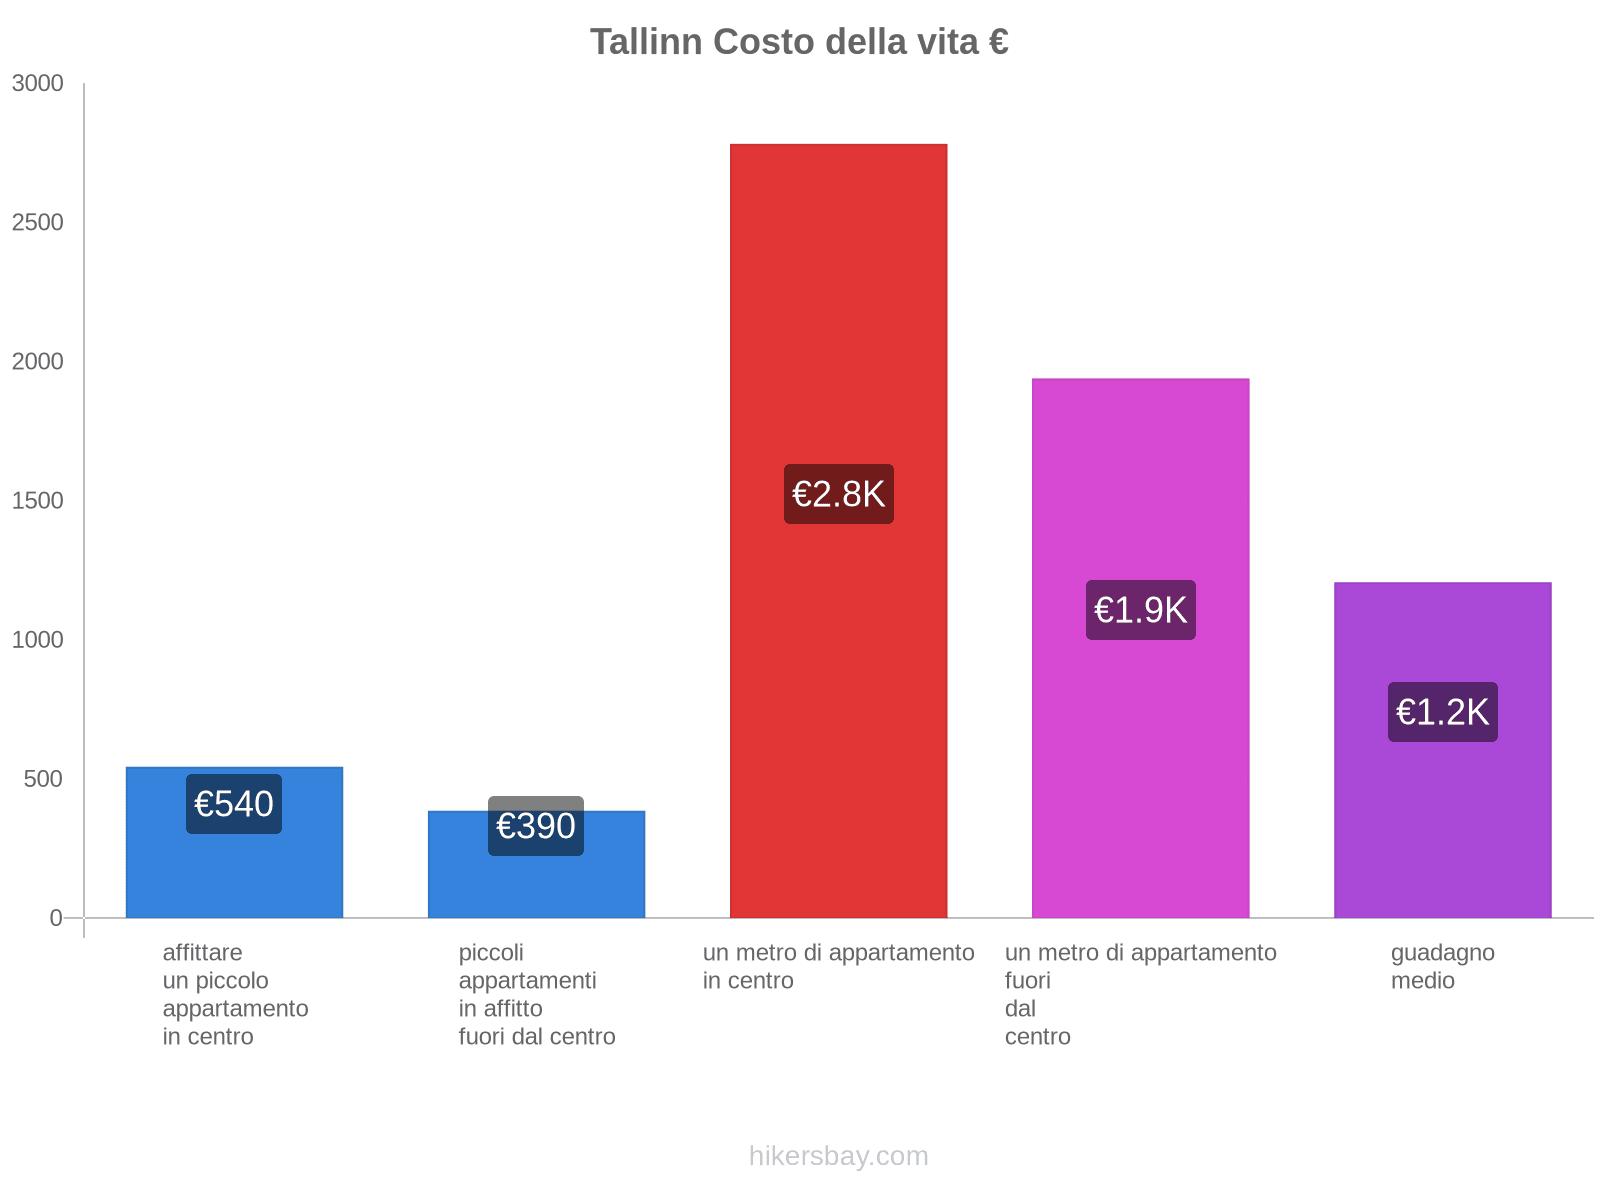 Tallinn costo della vita hikersbay.com